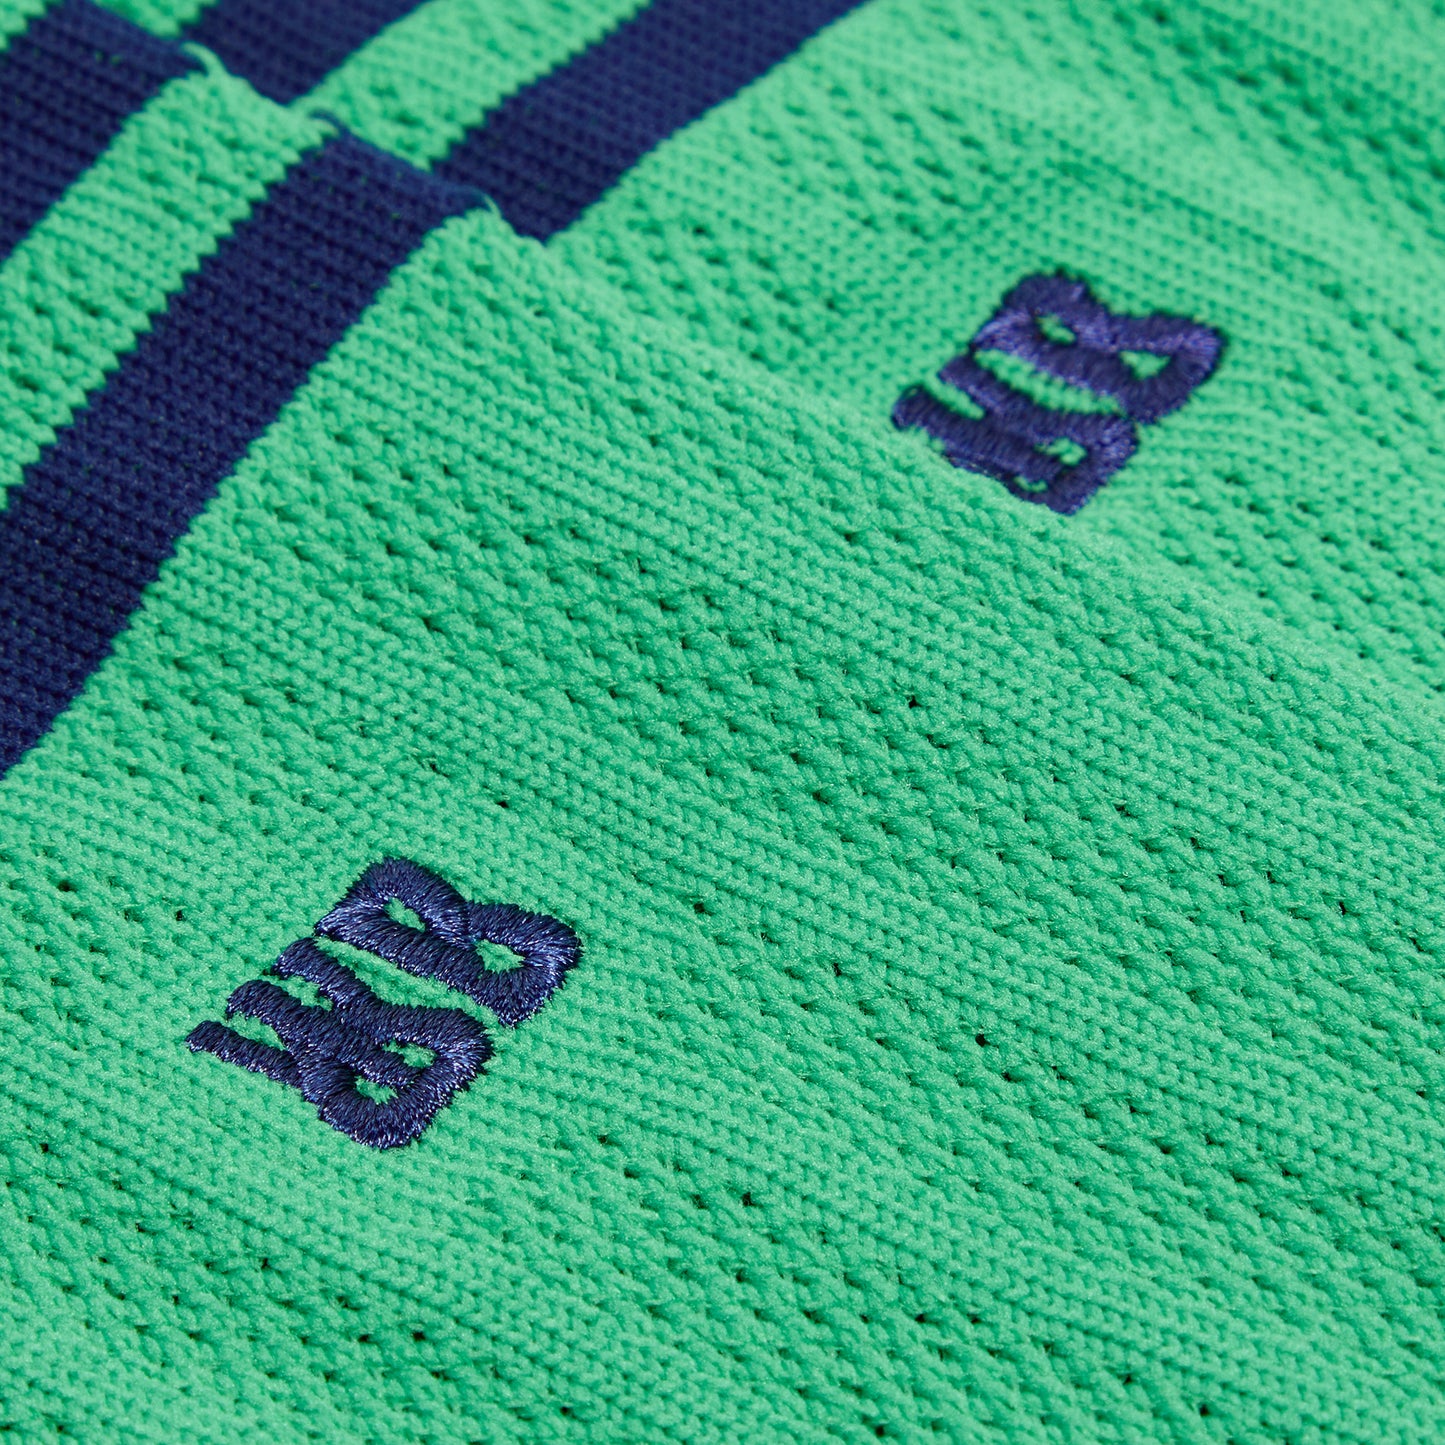 Adidas x Wales Bonner Socks (Green/Navy)